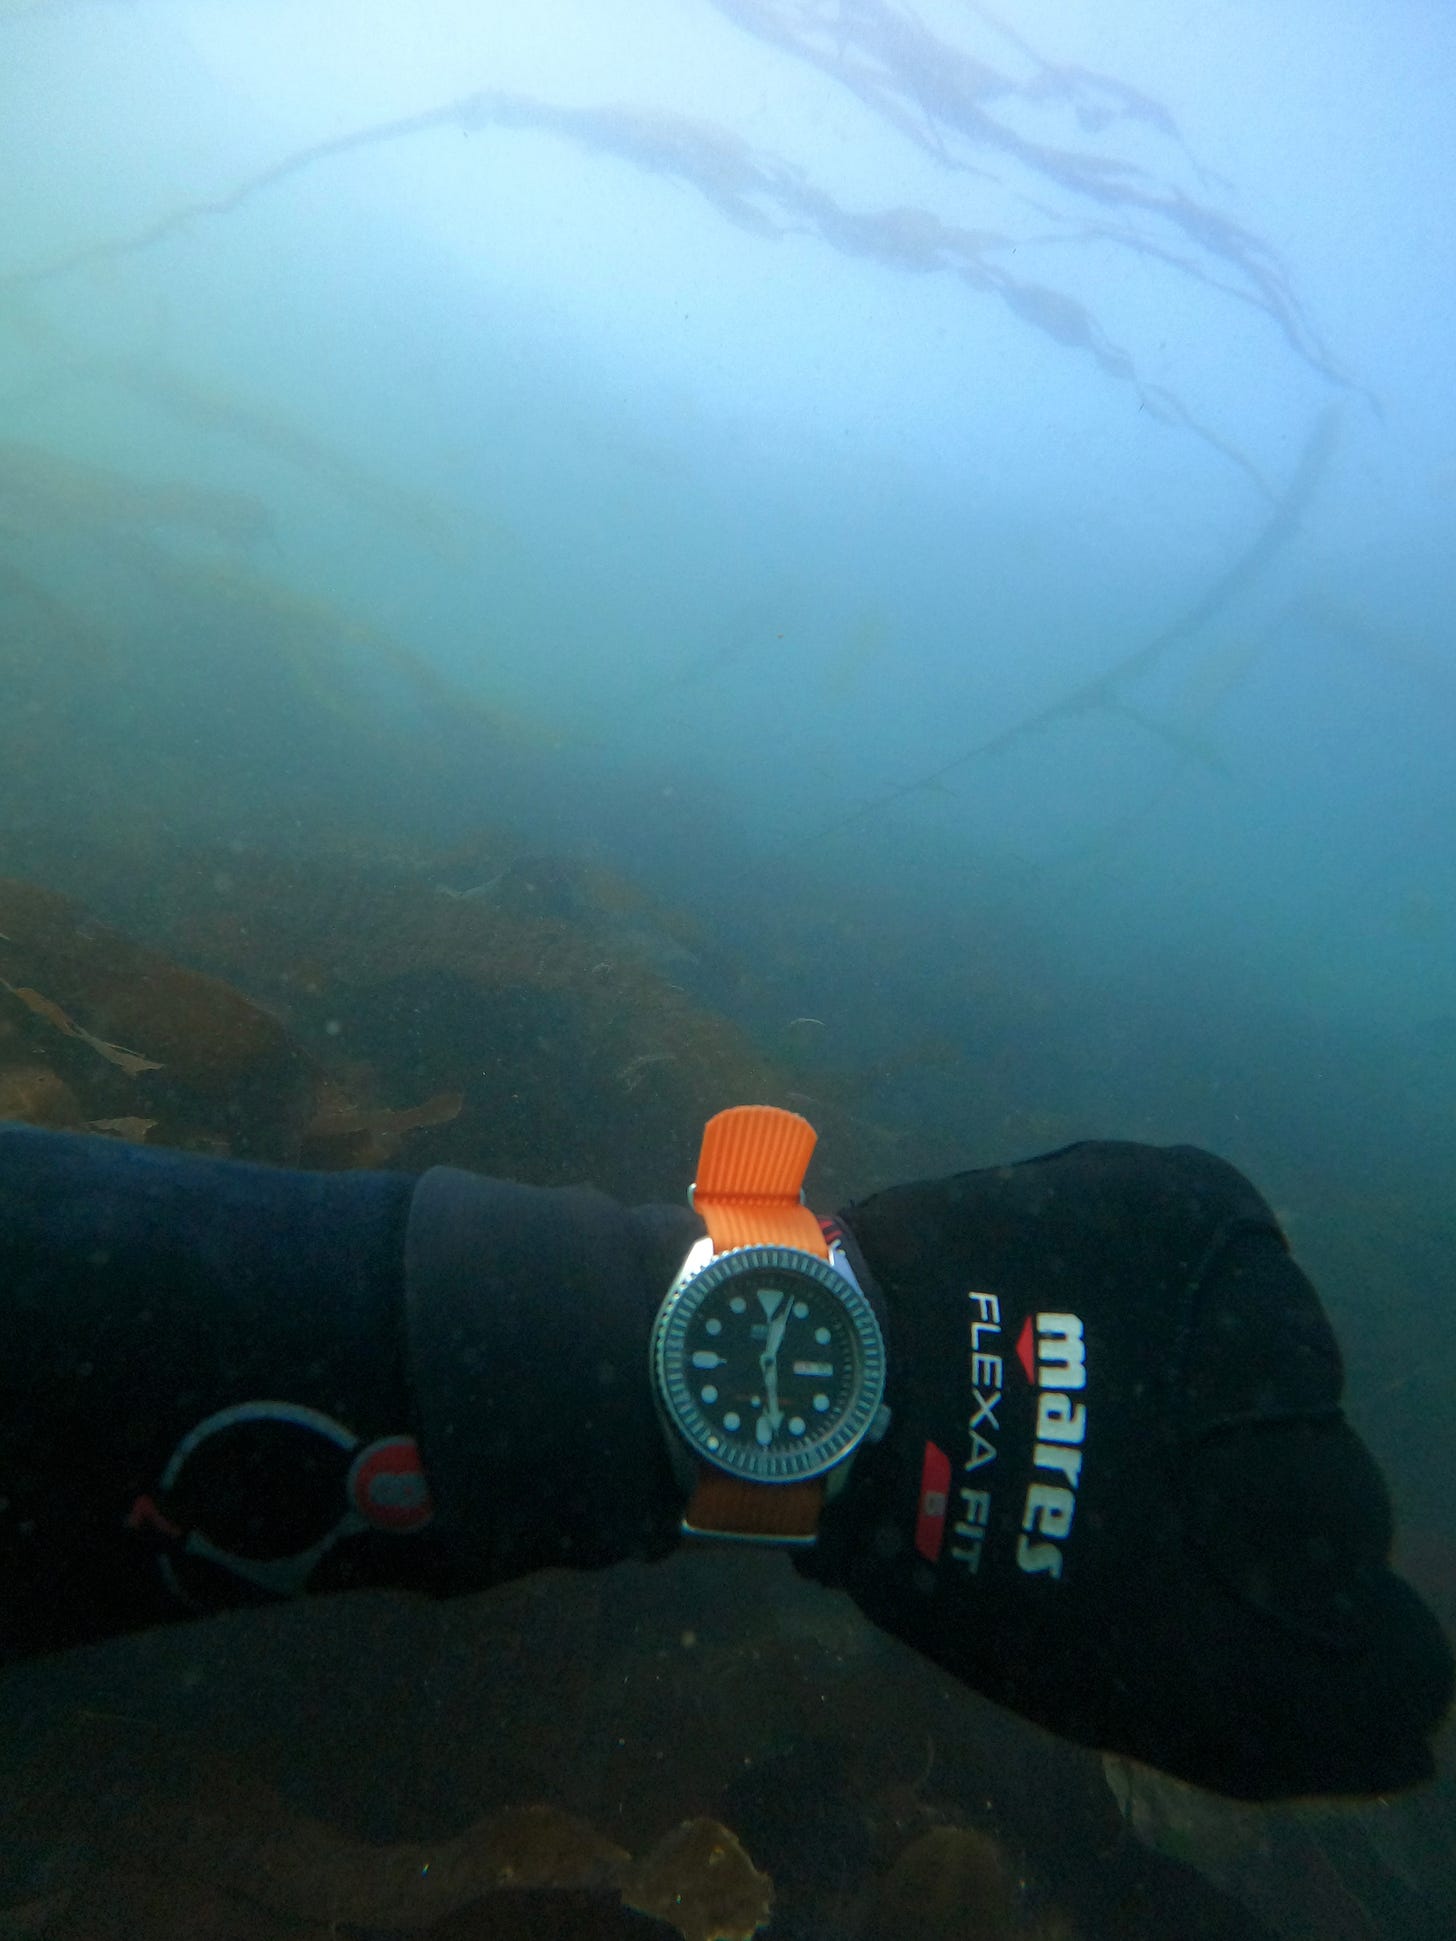 Wristshot of seiko skx007 on orange strap, kelp in background